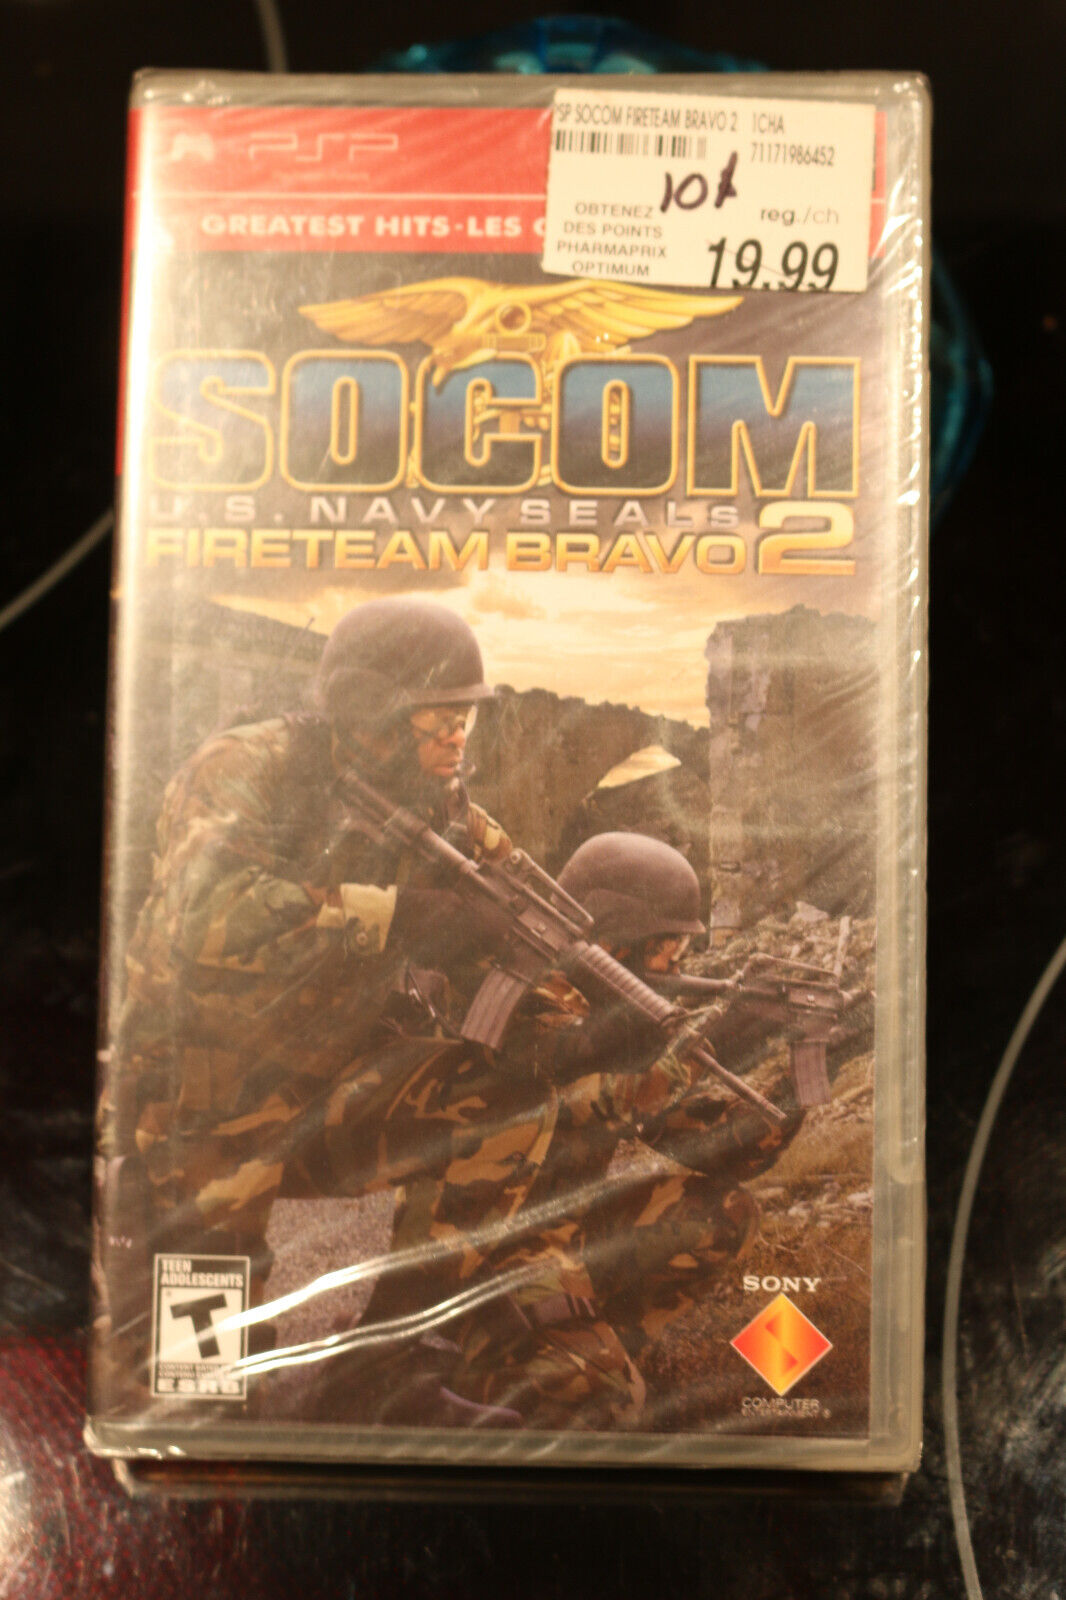 Buy SOCOM: U.S. Navy SEALs Fireteam Bravo 2 for PSP